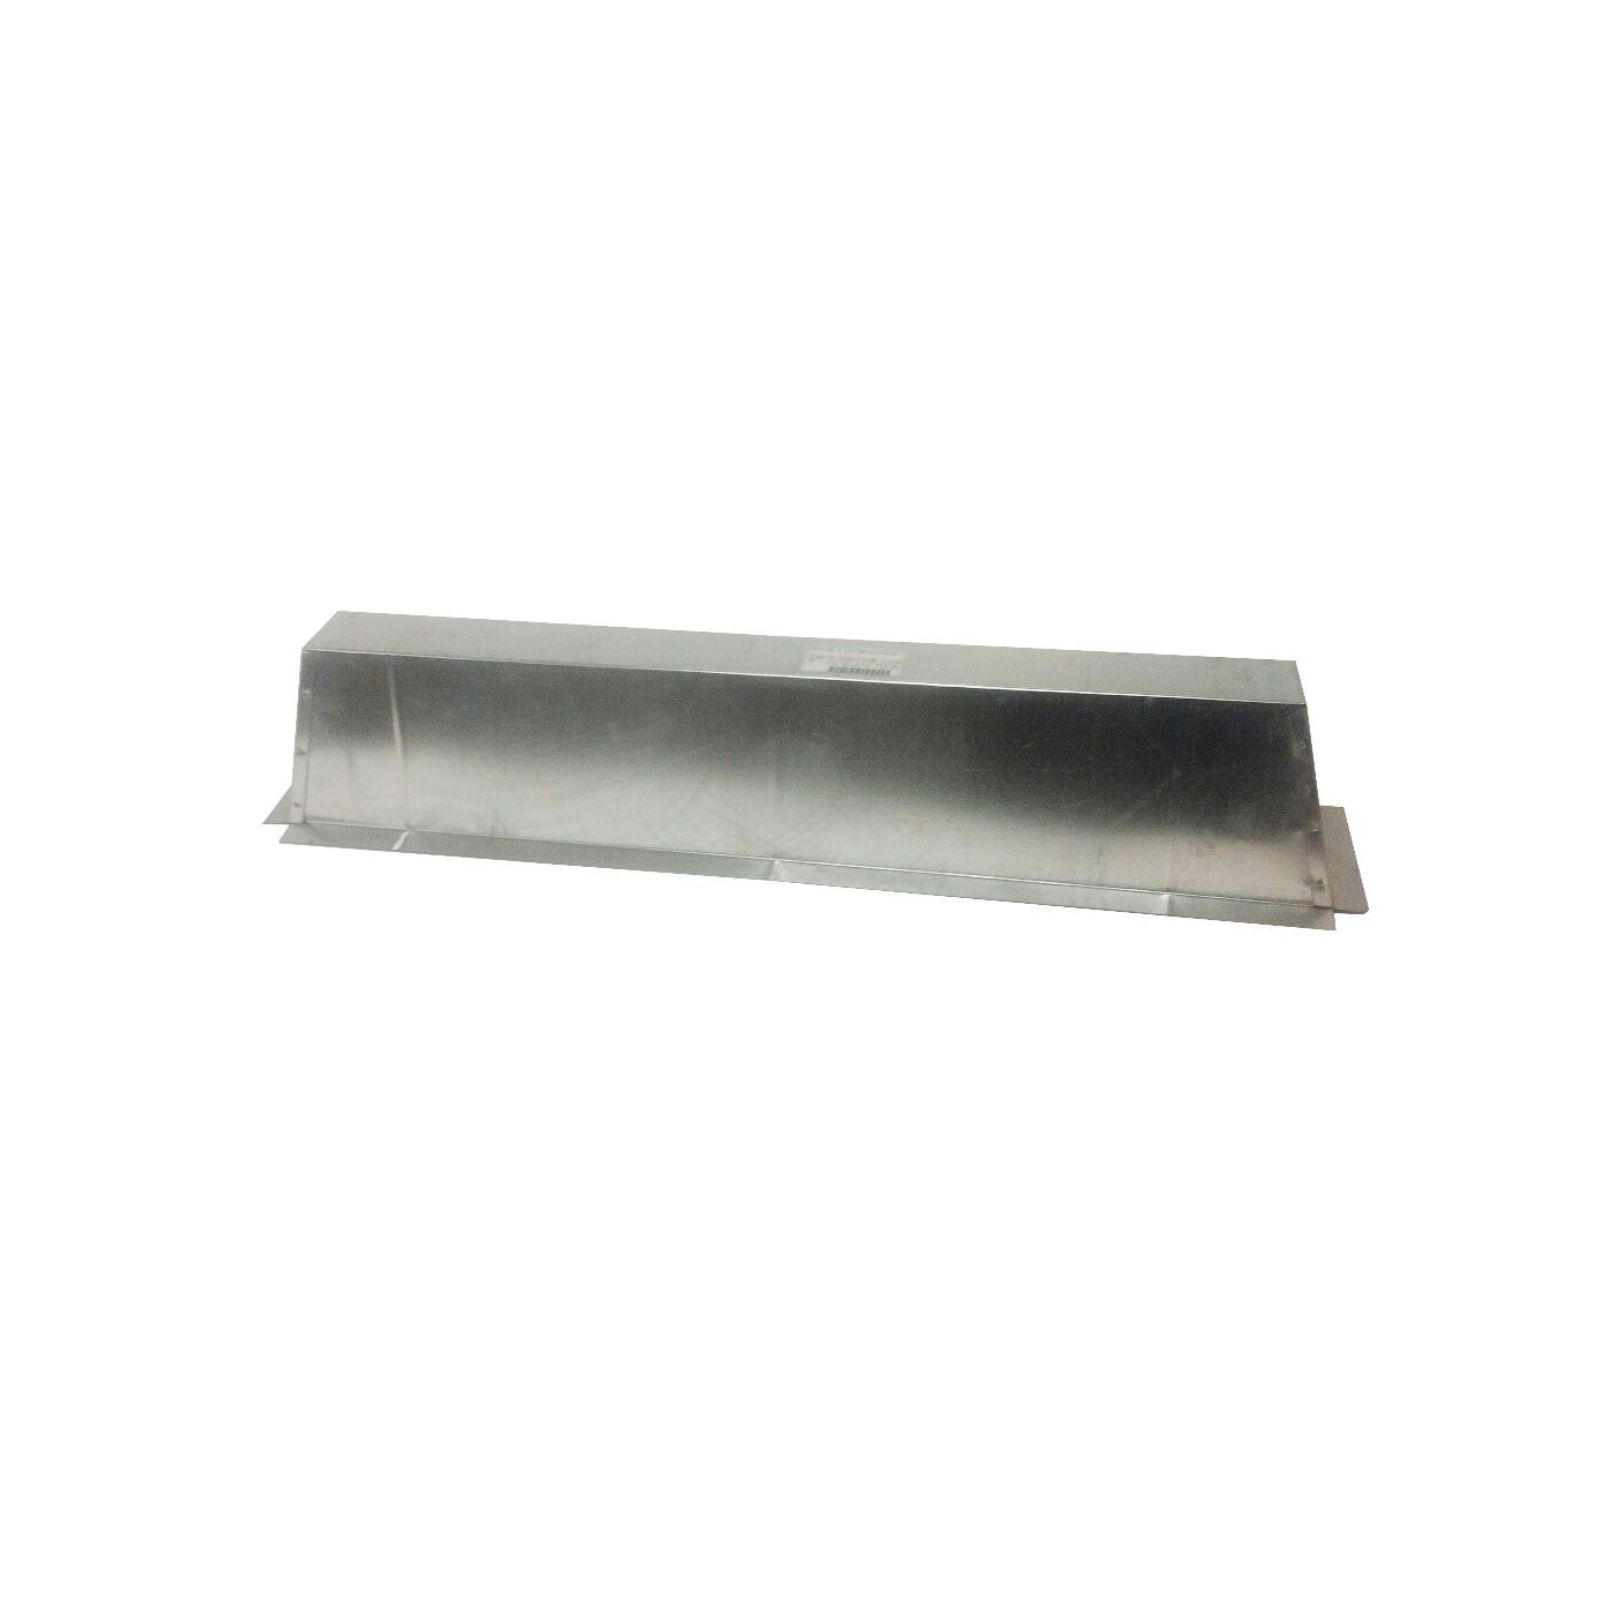 Modular Metal XXESJ3306 - Horizontal Furnace Stand - 24 Gauge - 1" Flange (4)Sides33" X 5.5" /30" X 2.5" - 6" High